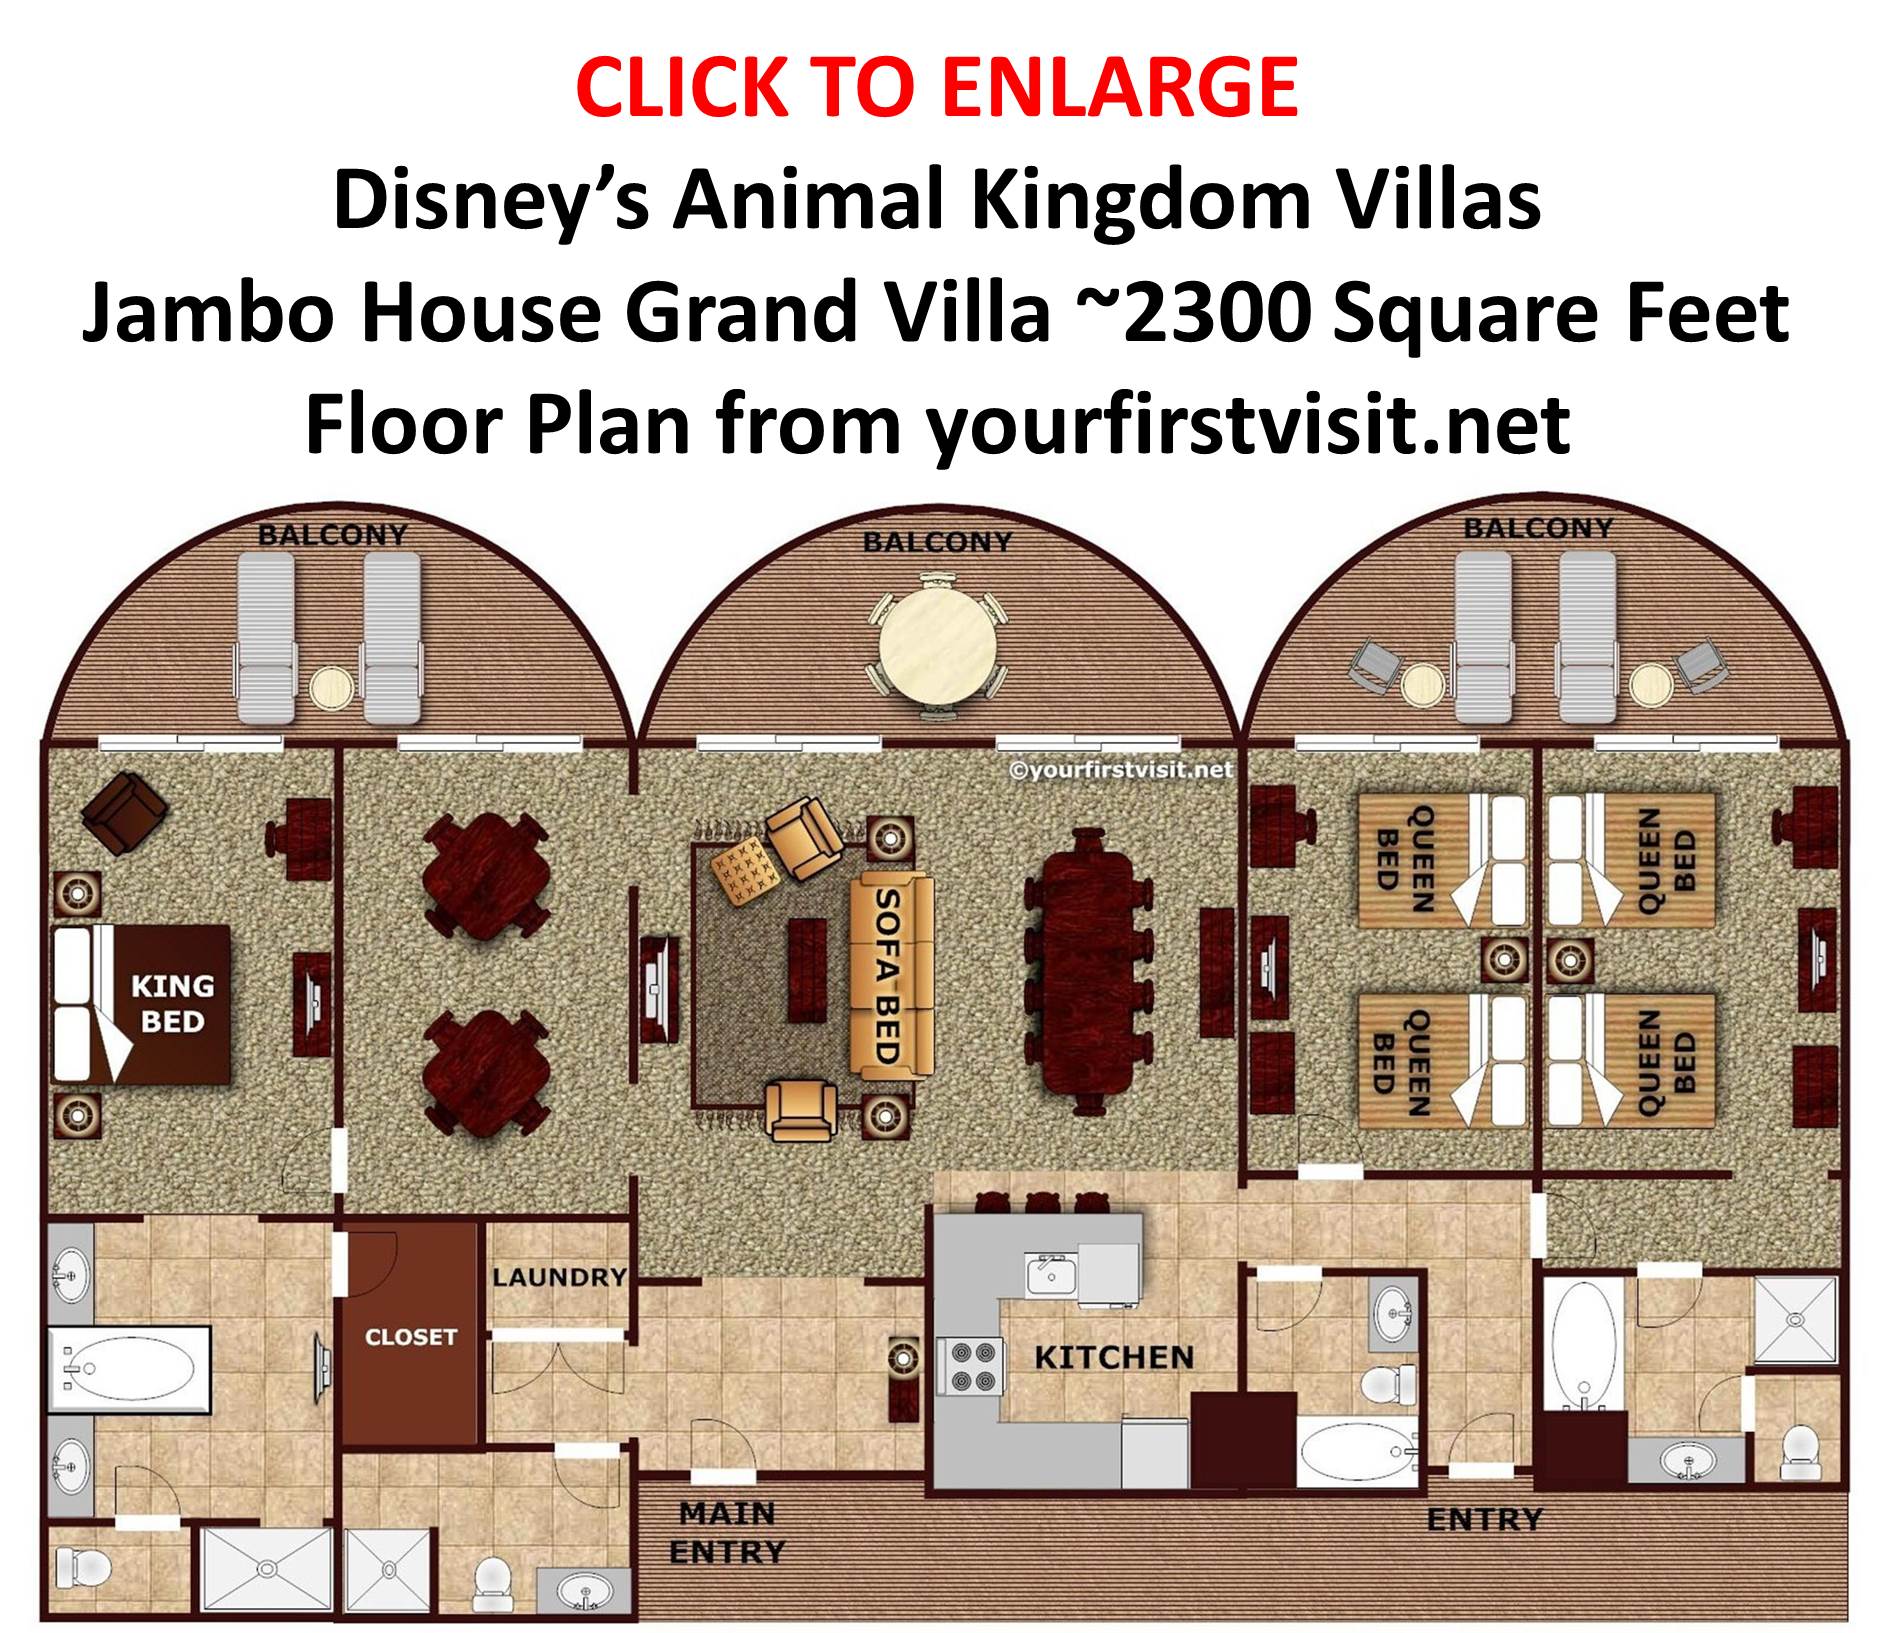 Disneys Jambo House Grand Villa floor plan from yourfisrtvisit